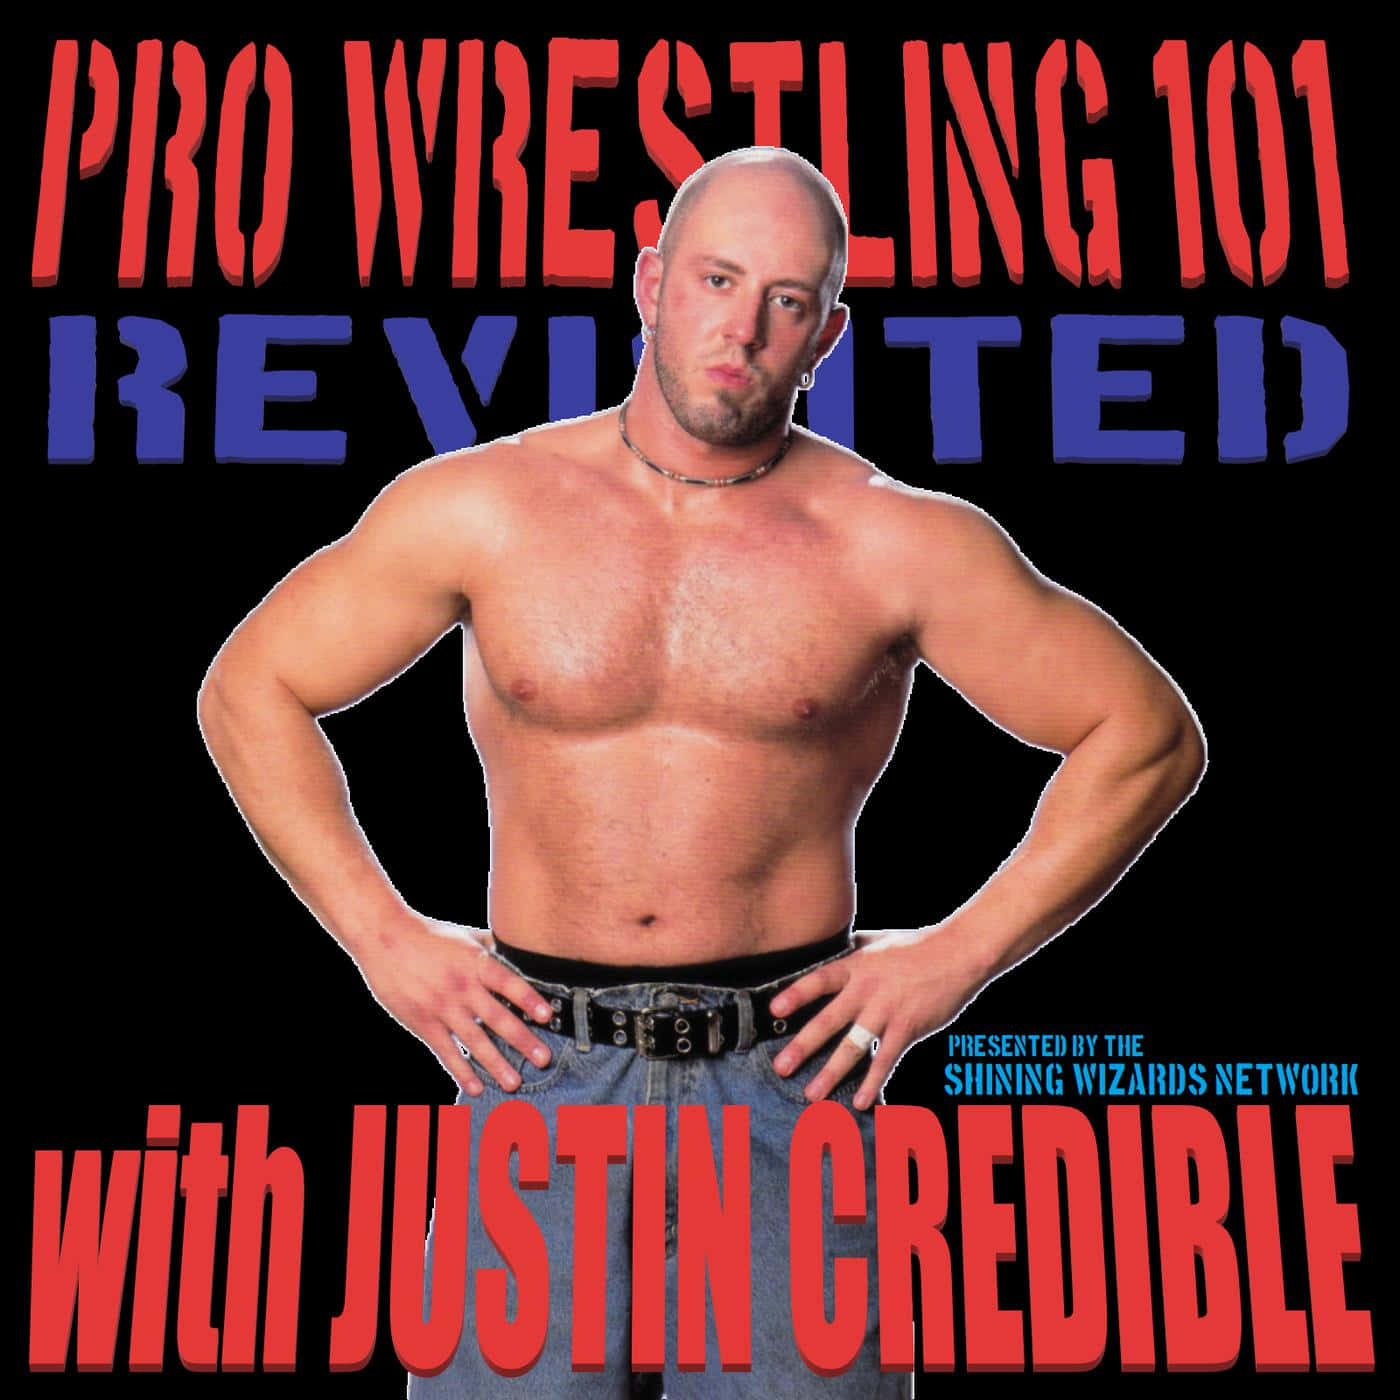 Justin Credible Pro Wrestler Wallpaper